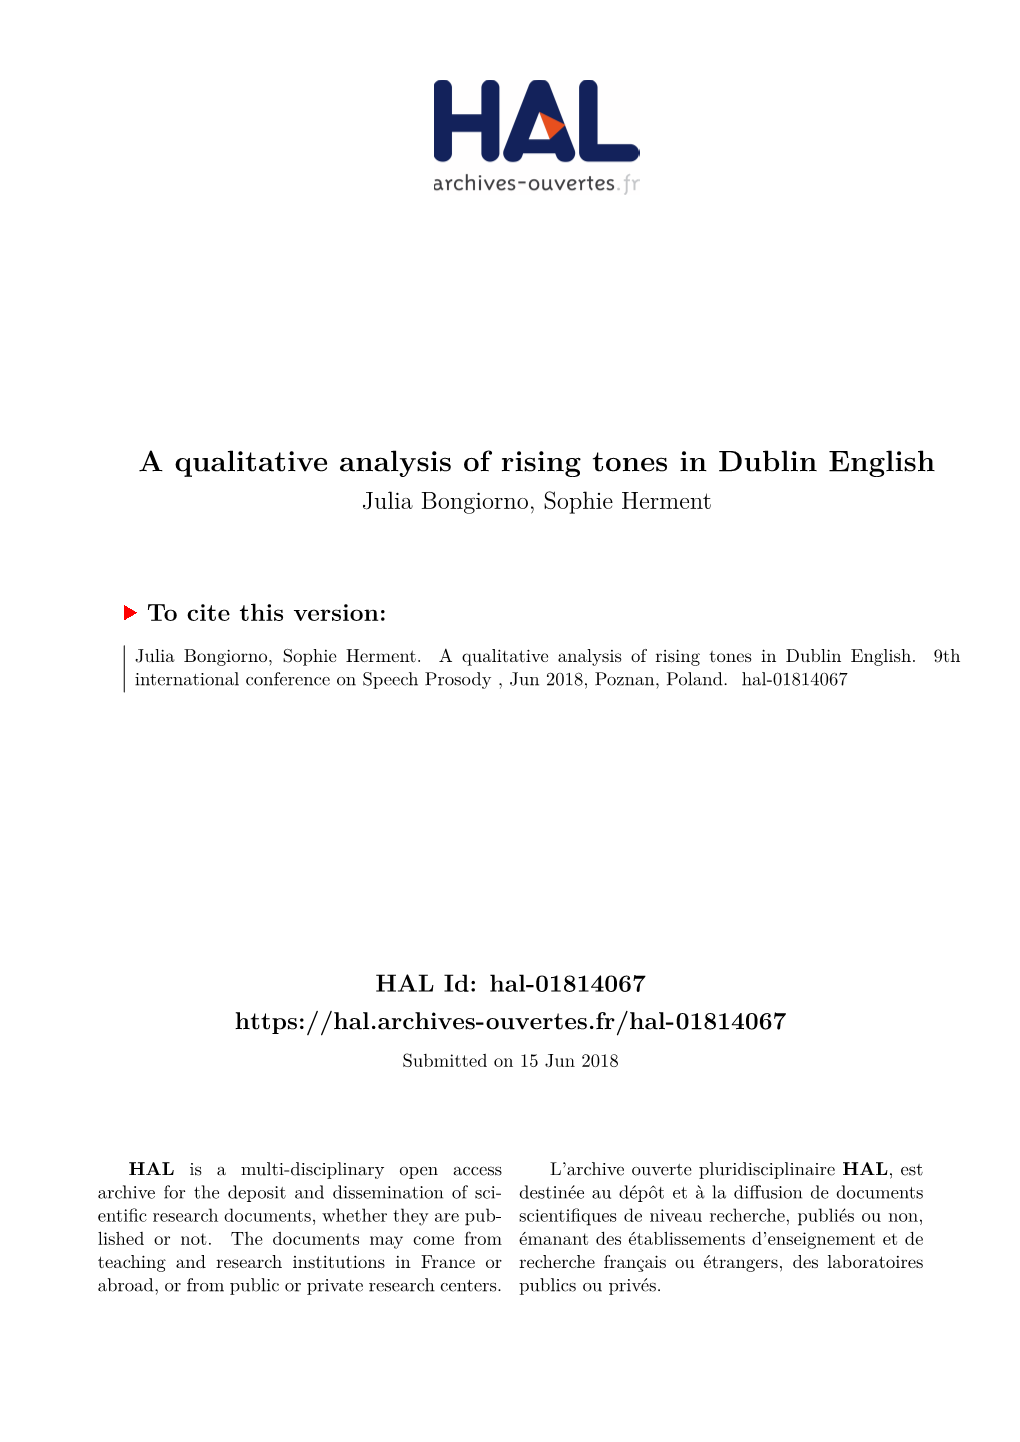 A Qualitative Analysis of Rising Tones in Dublin English Julia Bongiorno, Sophie Herment